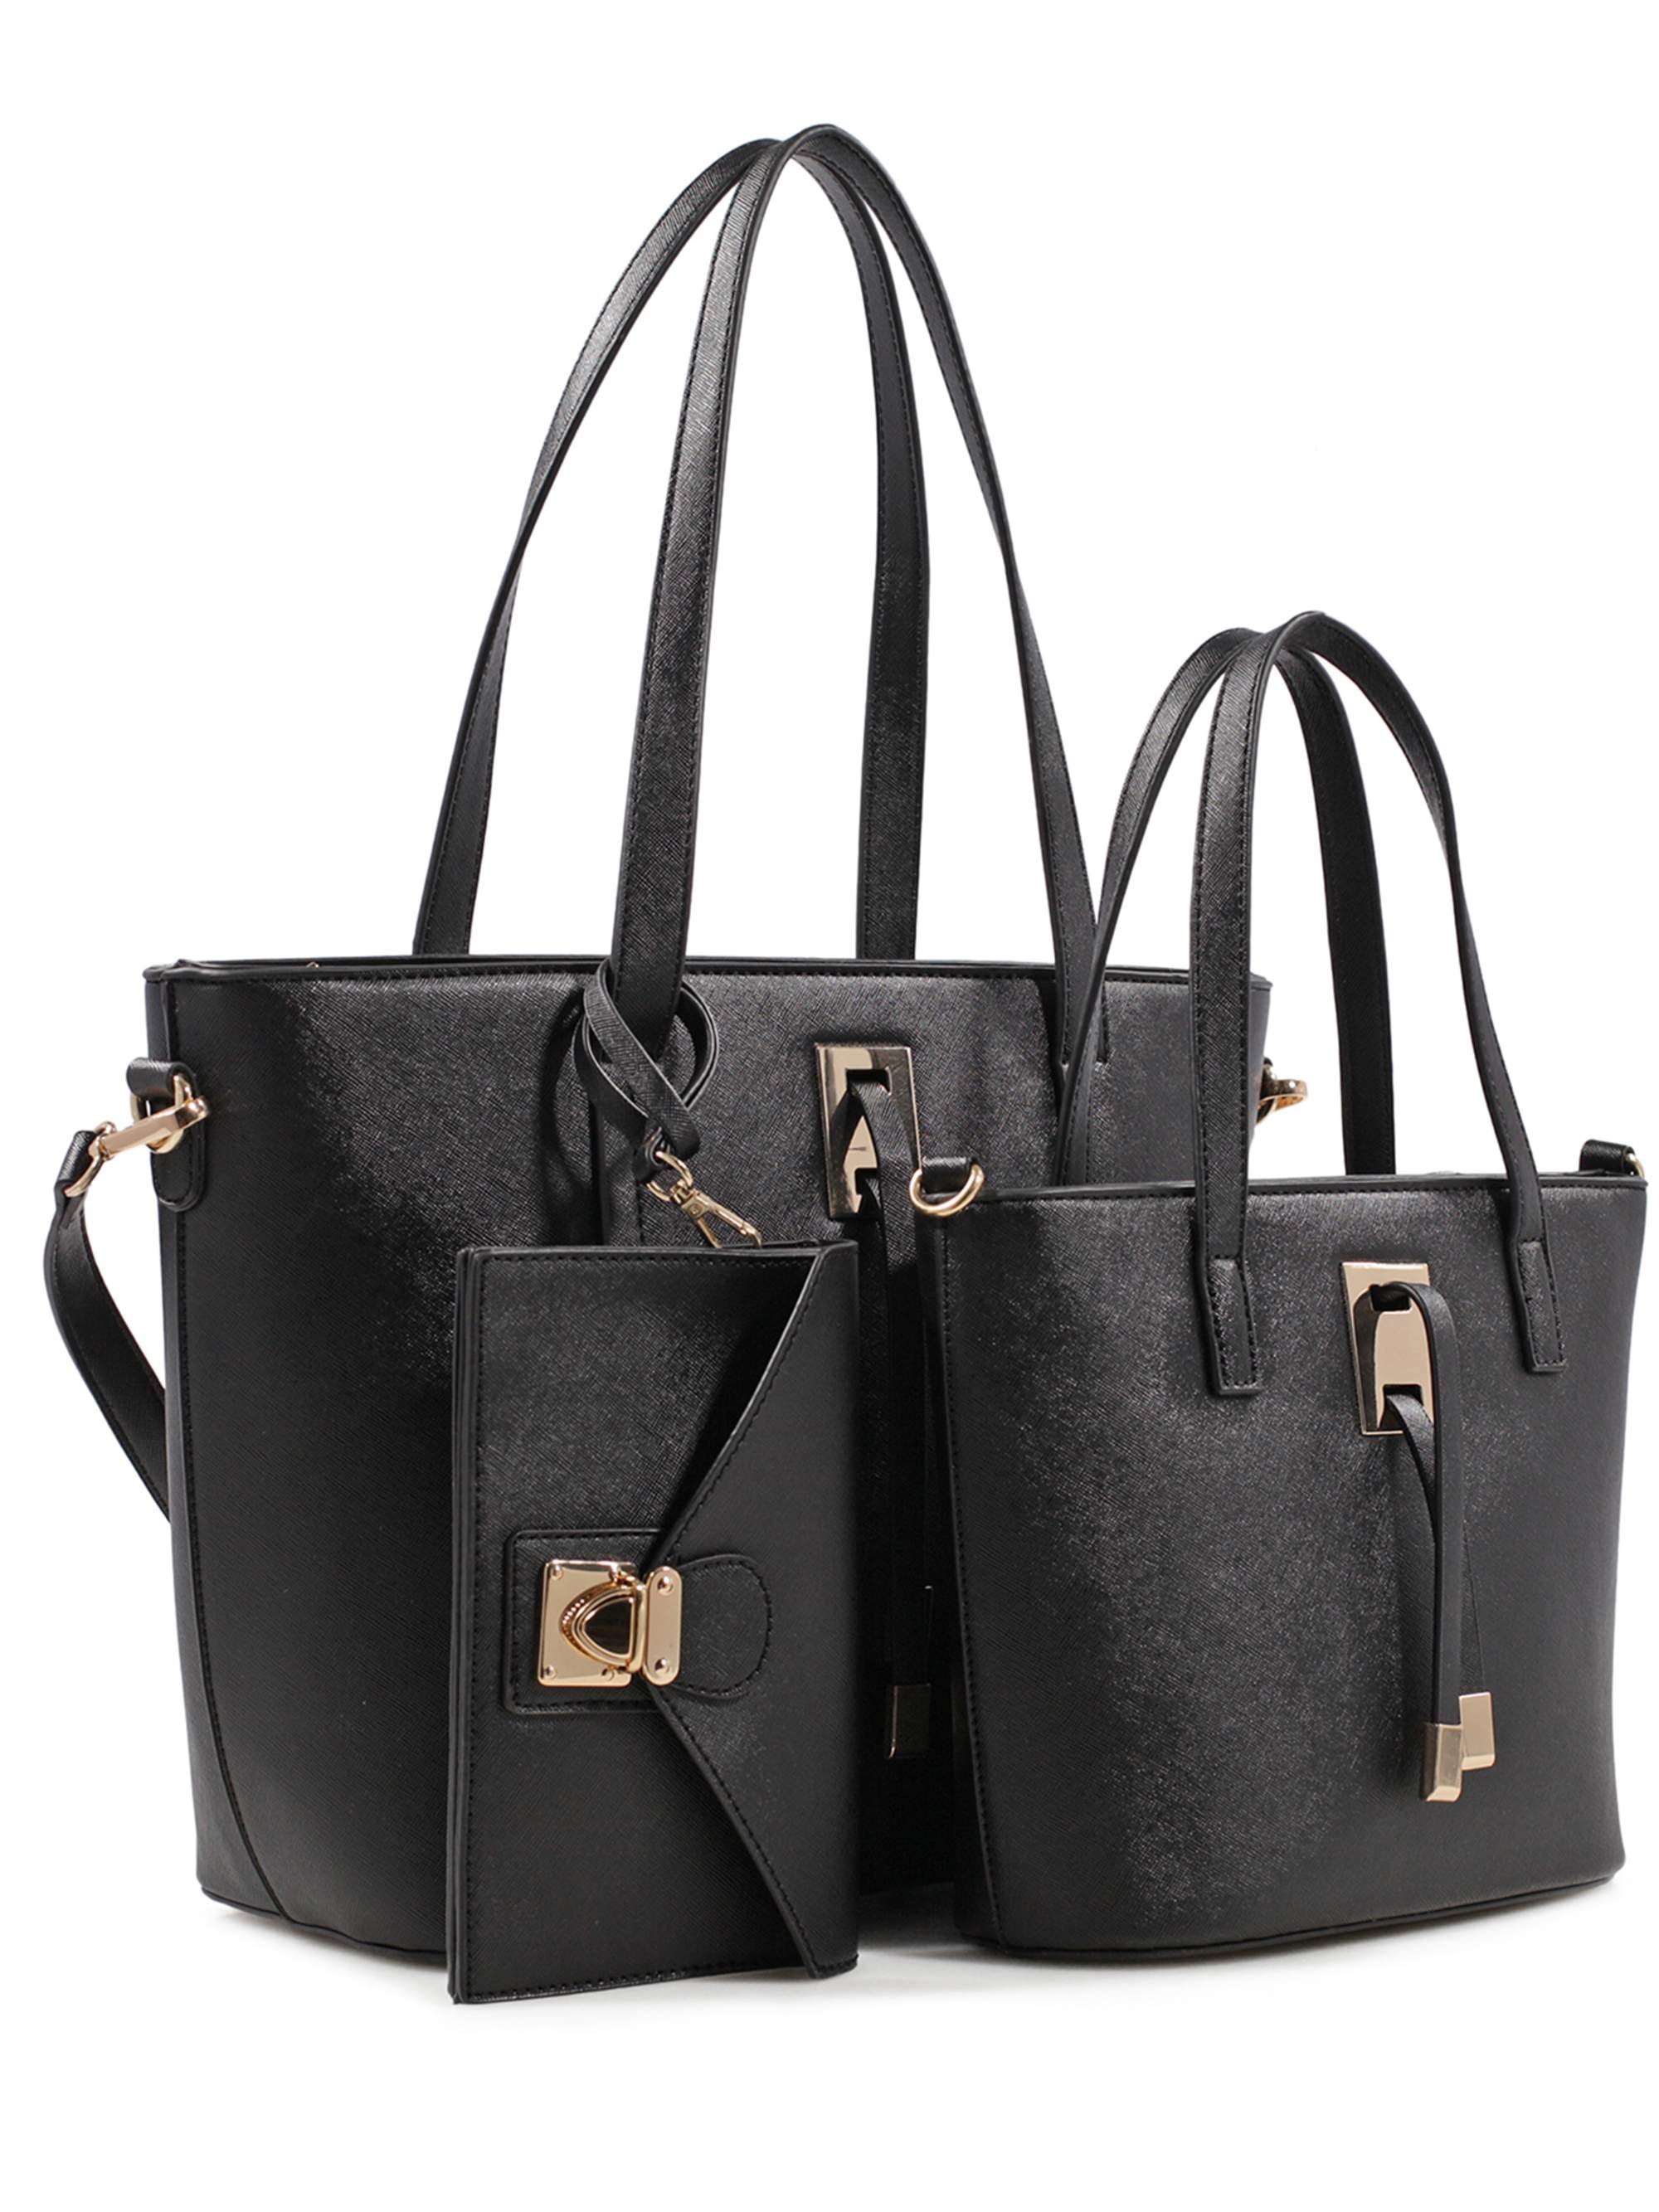 3-Piece Tote Handbag Set- Black - Walmart.com